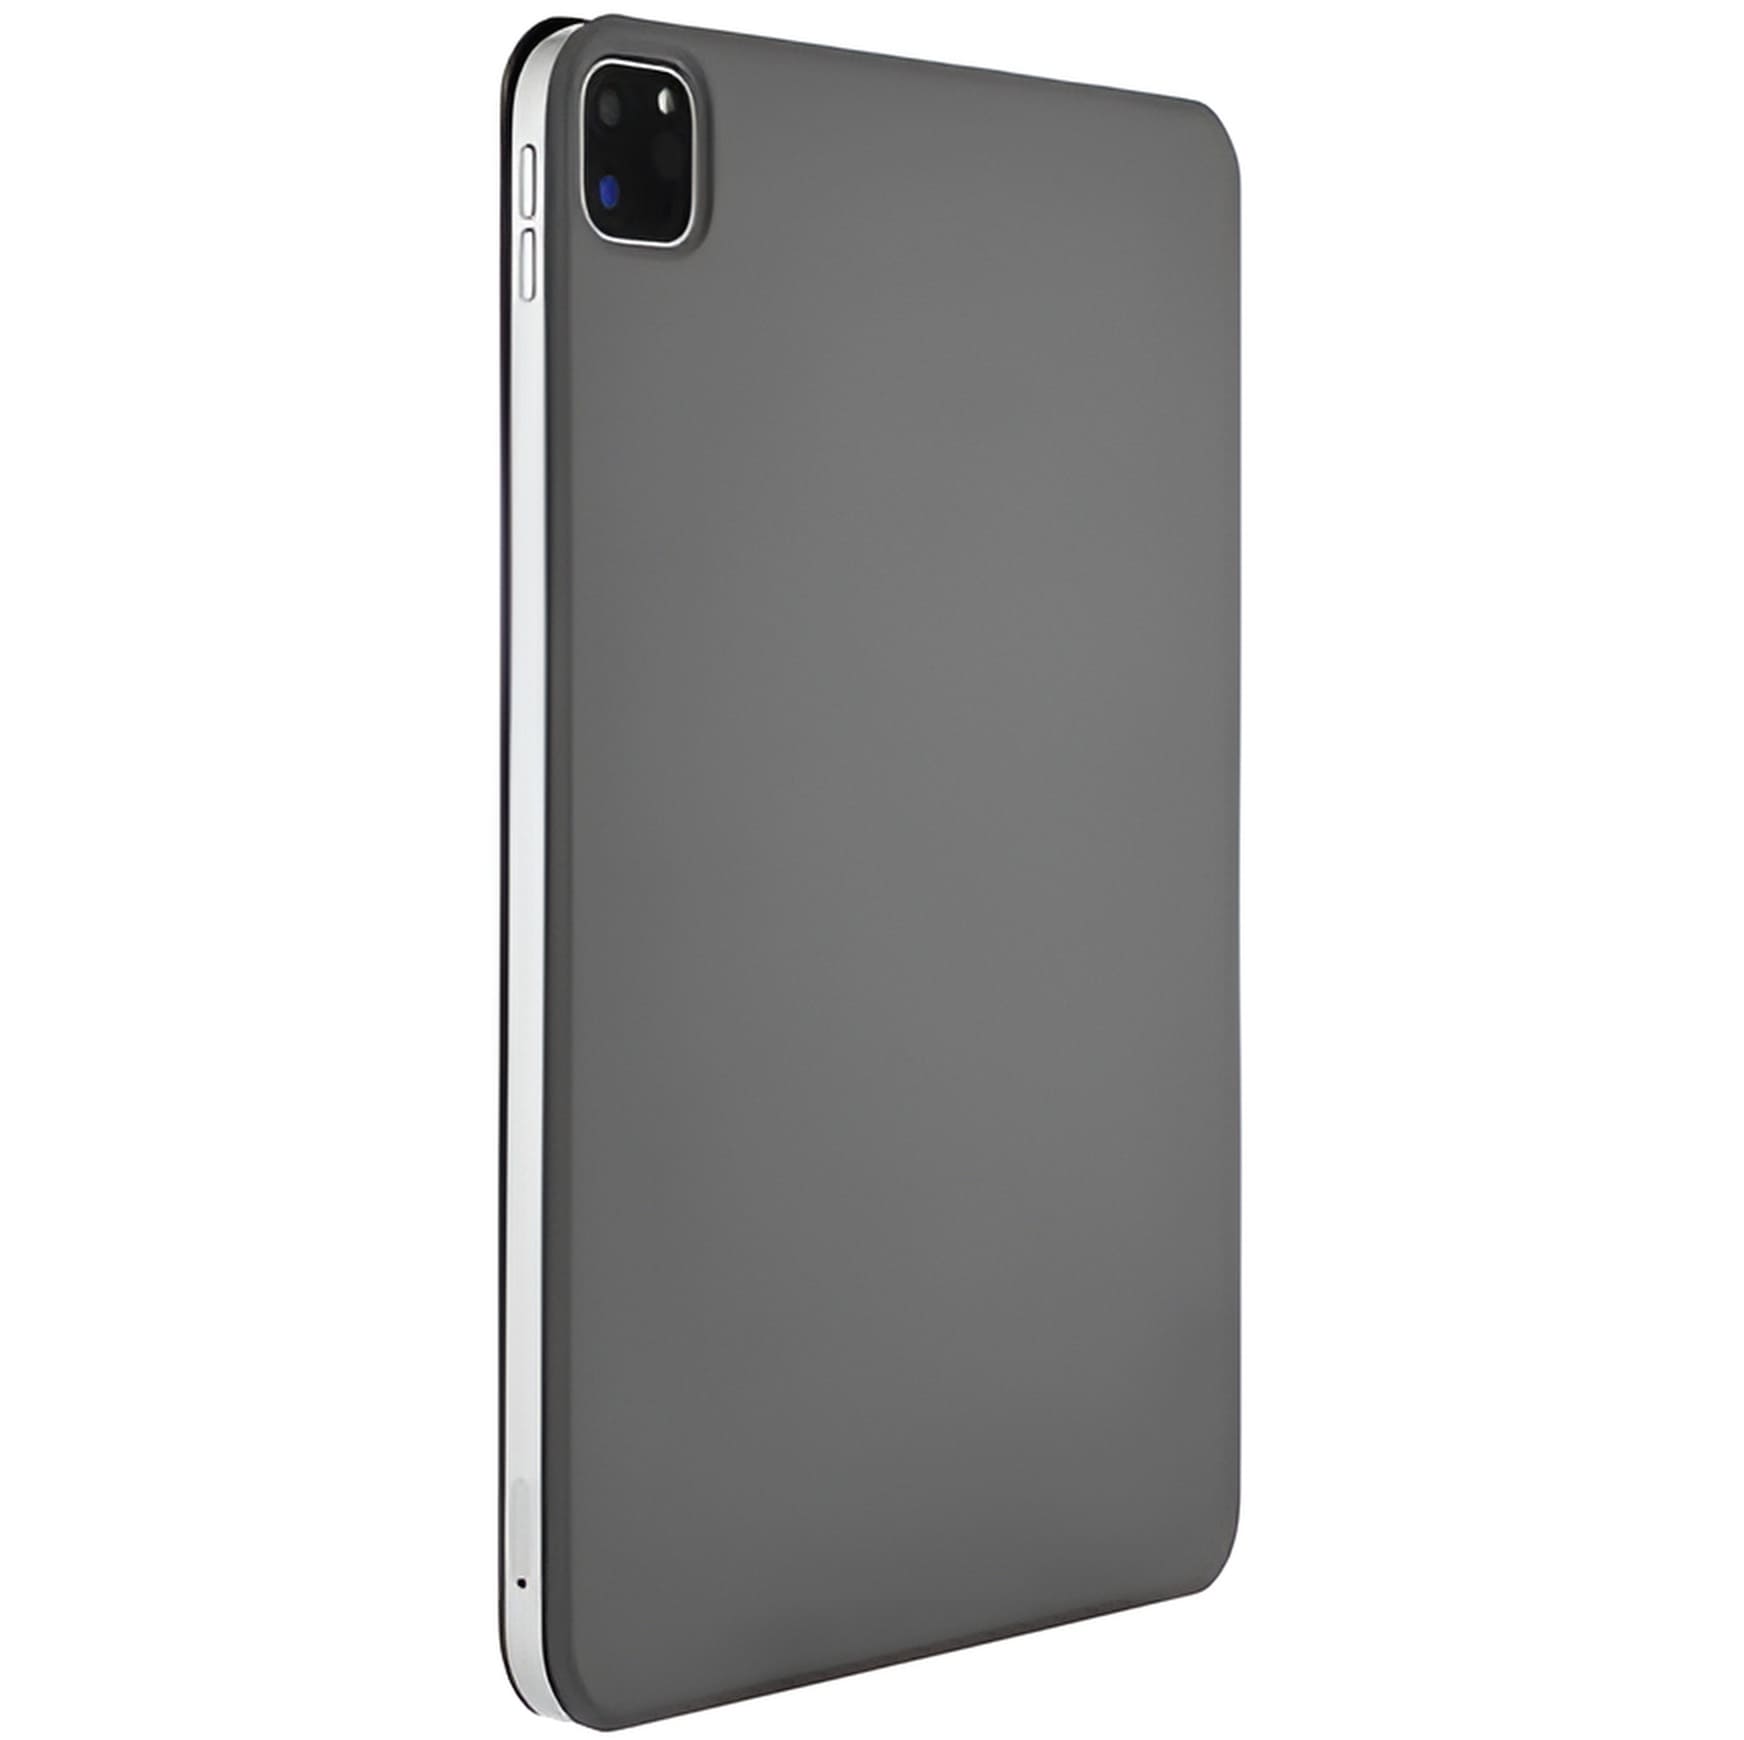 Фото — Чехол для планшета uBear Touch Case, iPad Pro 11'', магнитный, софт-тач, темно-серый